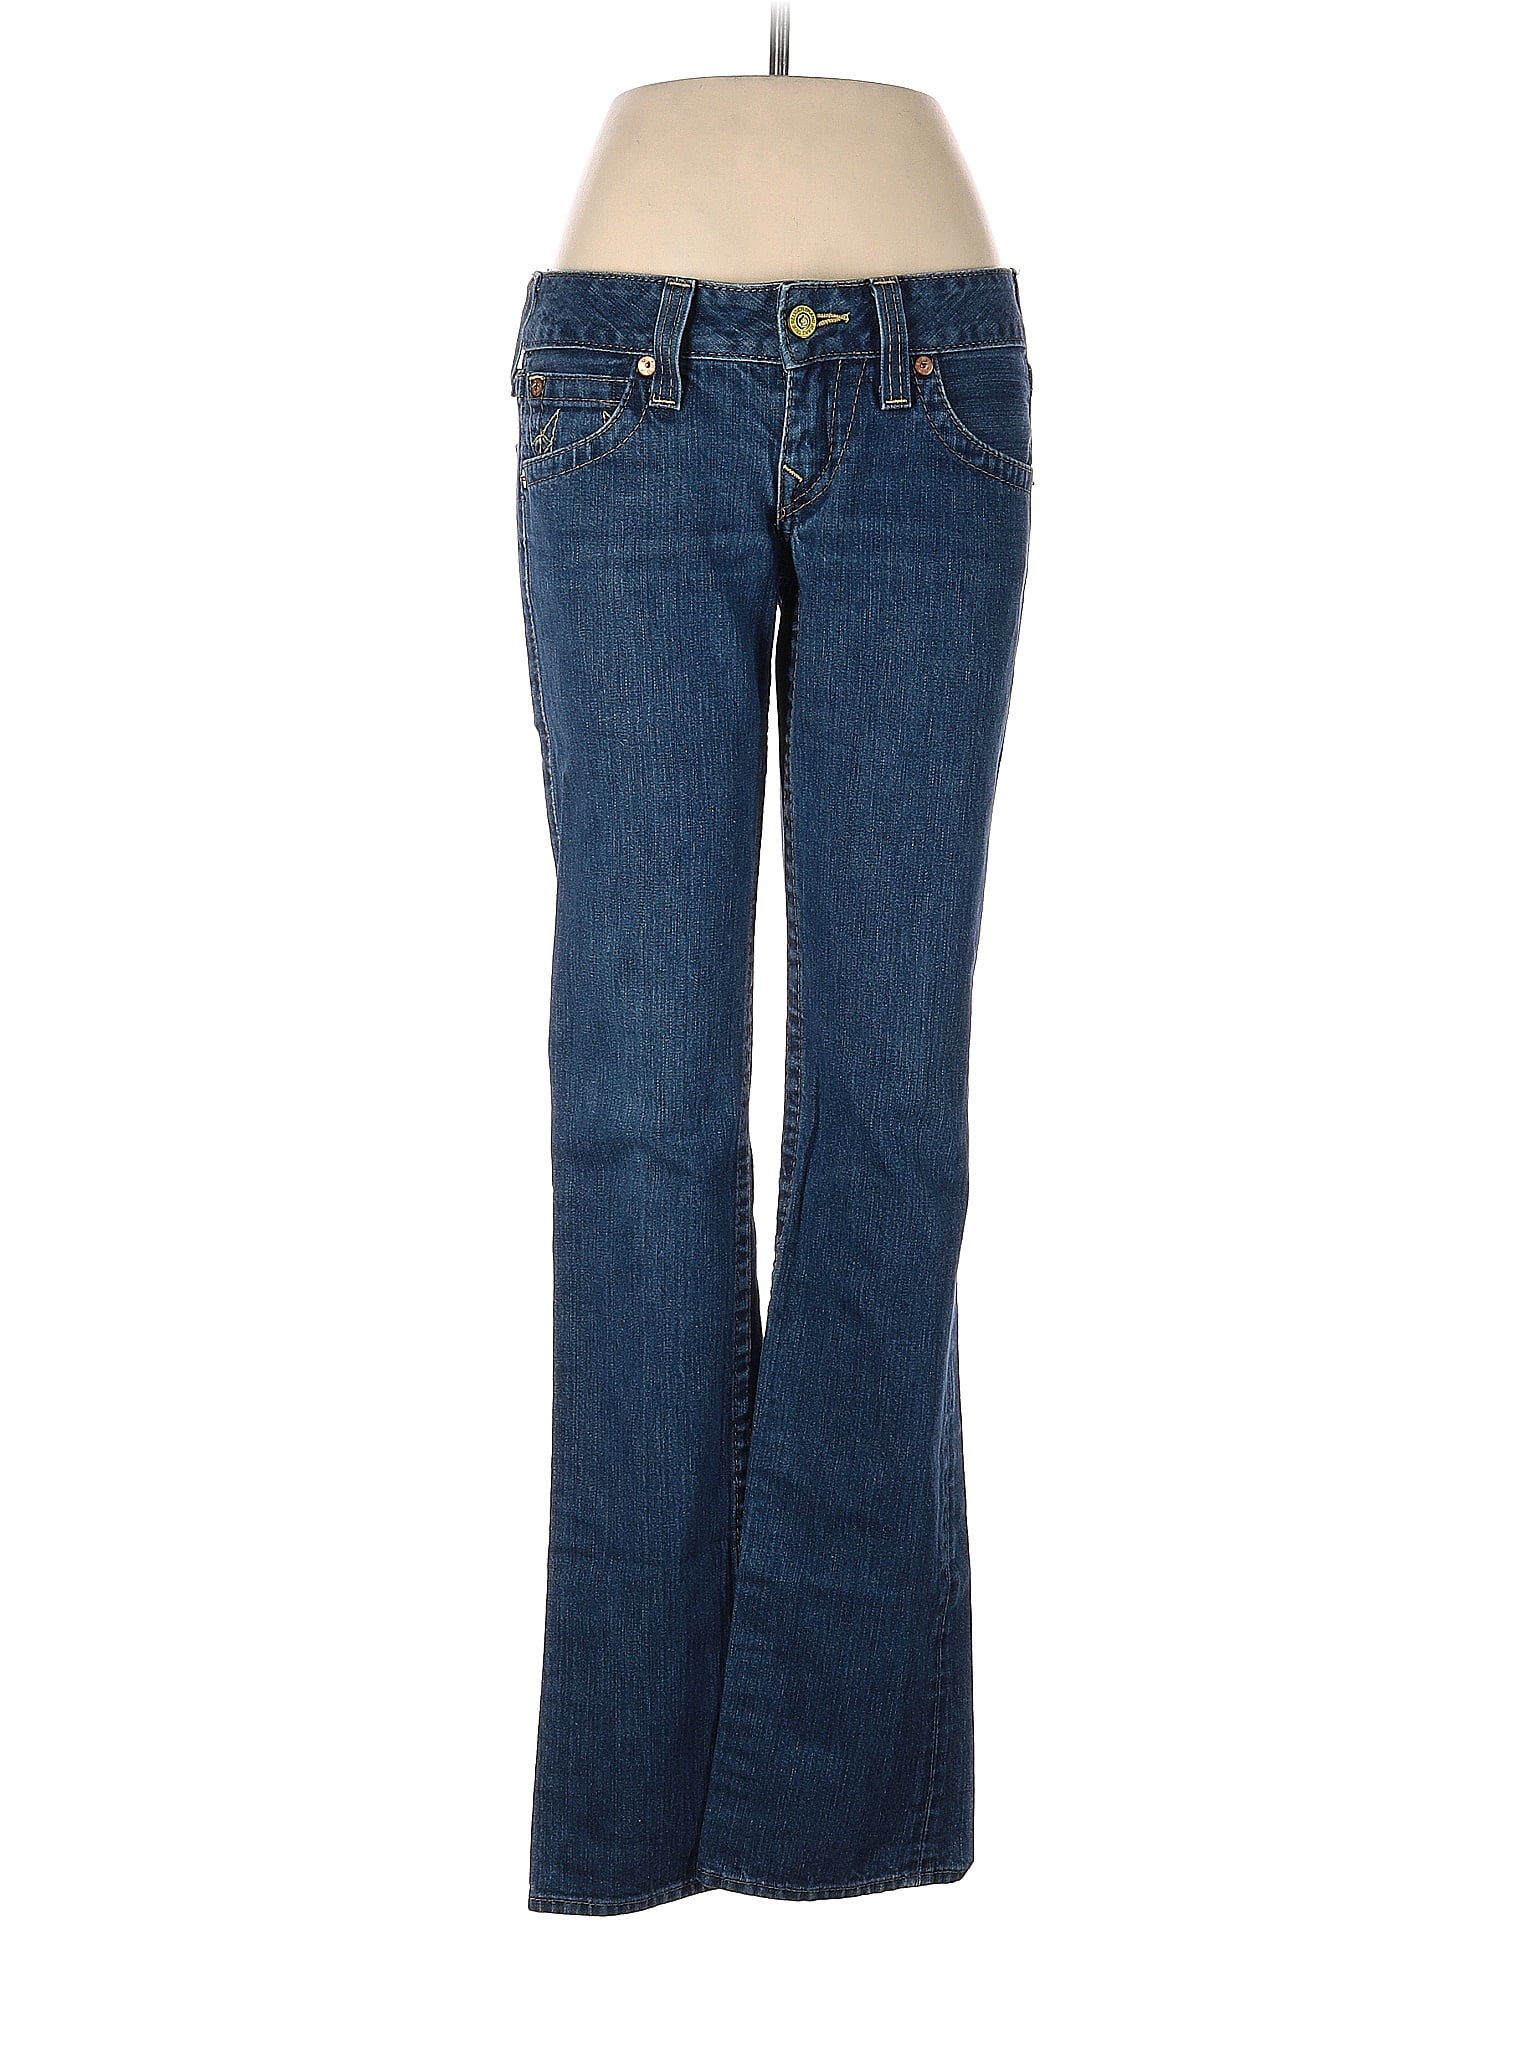 True Religion 100% Cotton Solid Blue Jeans 28 Waist - 56% off